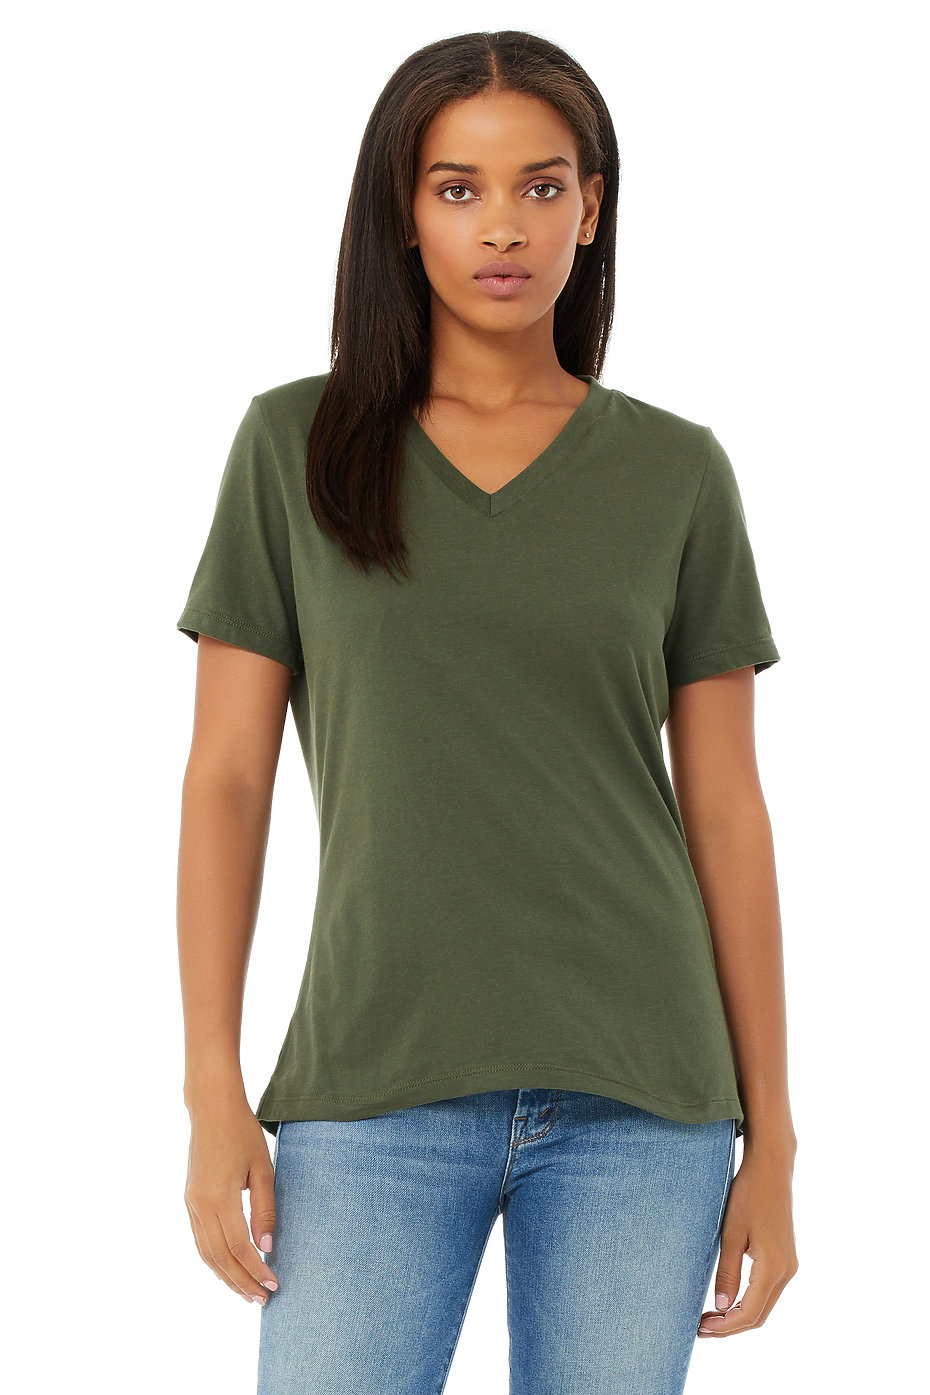 Joe's USA Ladies Tri-Blend Heather V-Neck T-Shirts Sizes in XS-4XL